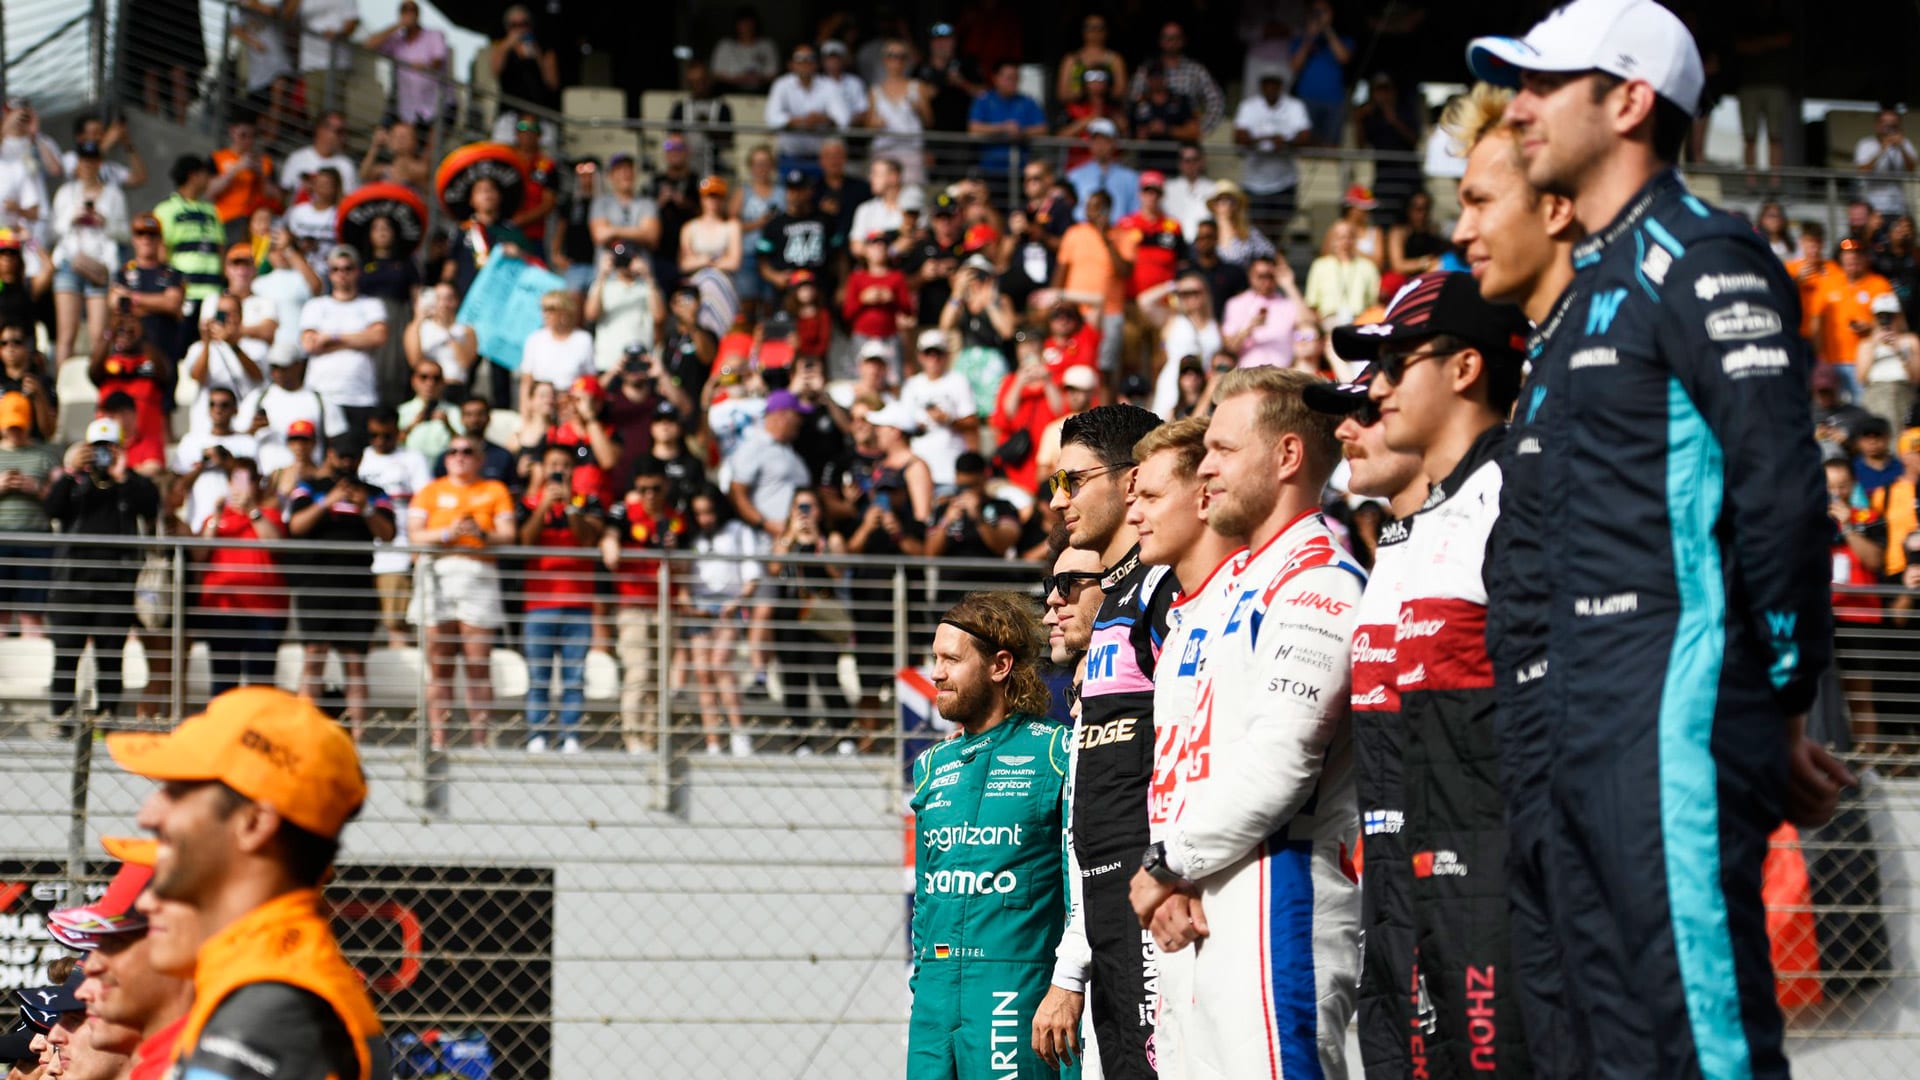 DRIVE TO SURVIVE Season 5 of Netflixs hit F1 documentary has landed Formula 1®